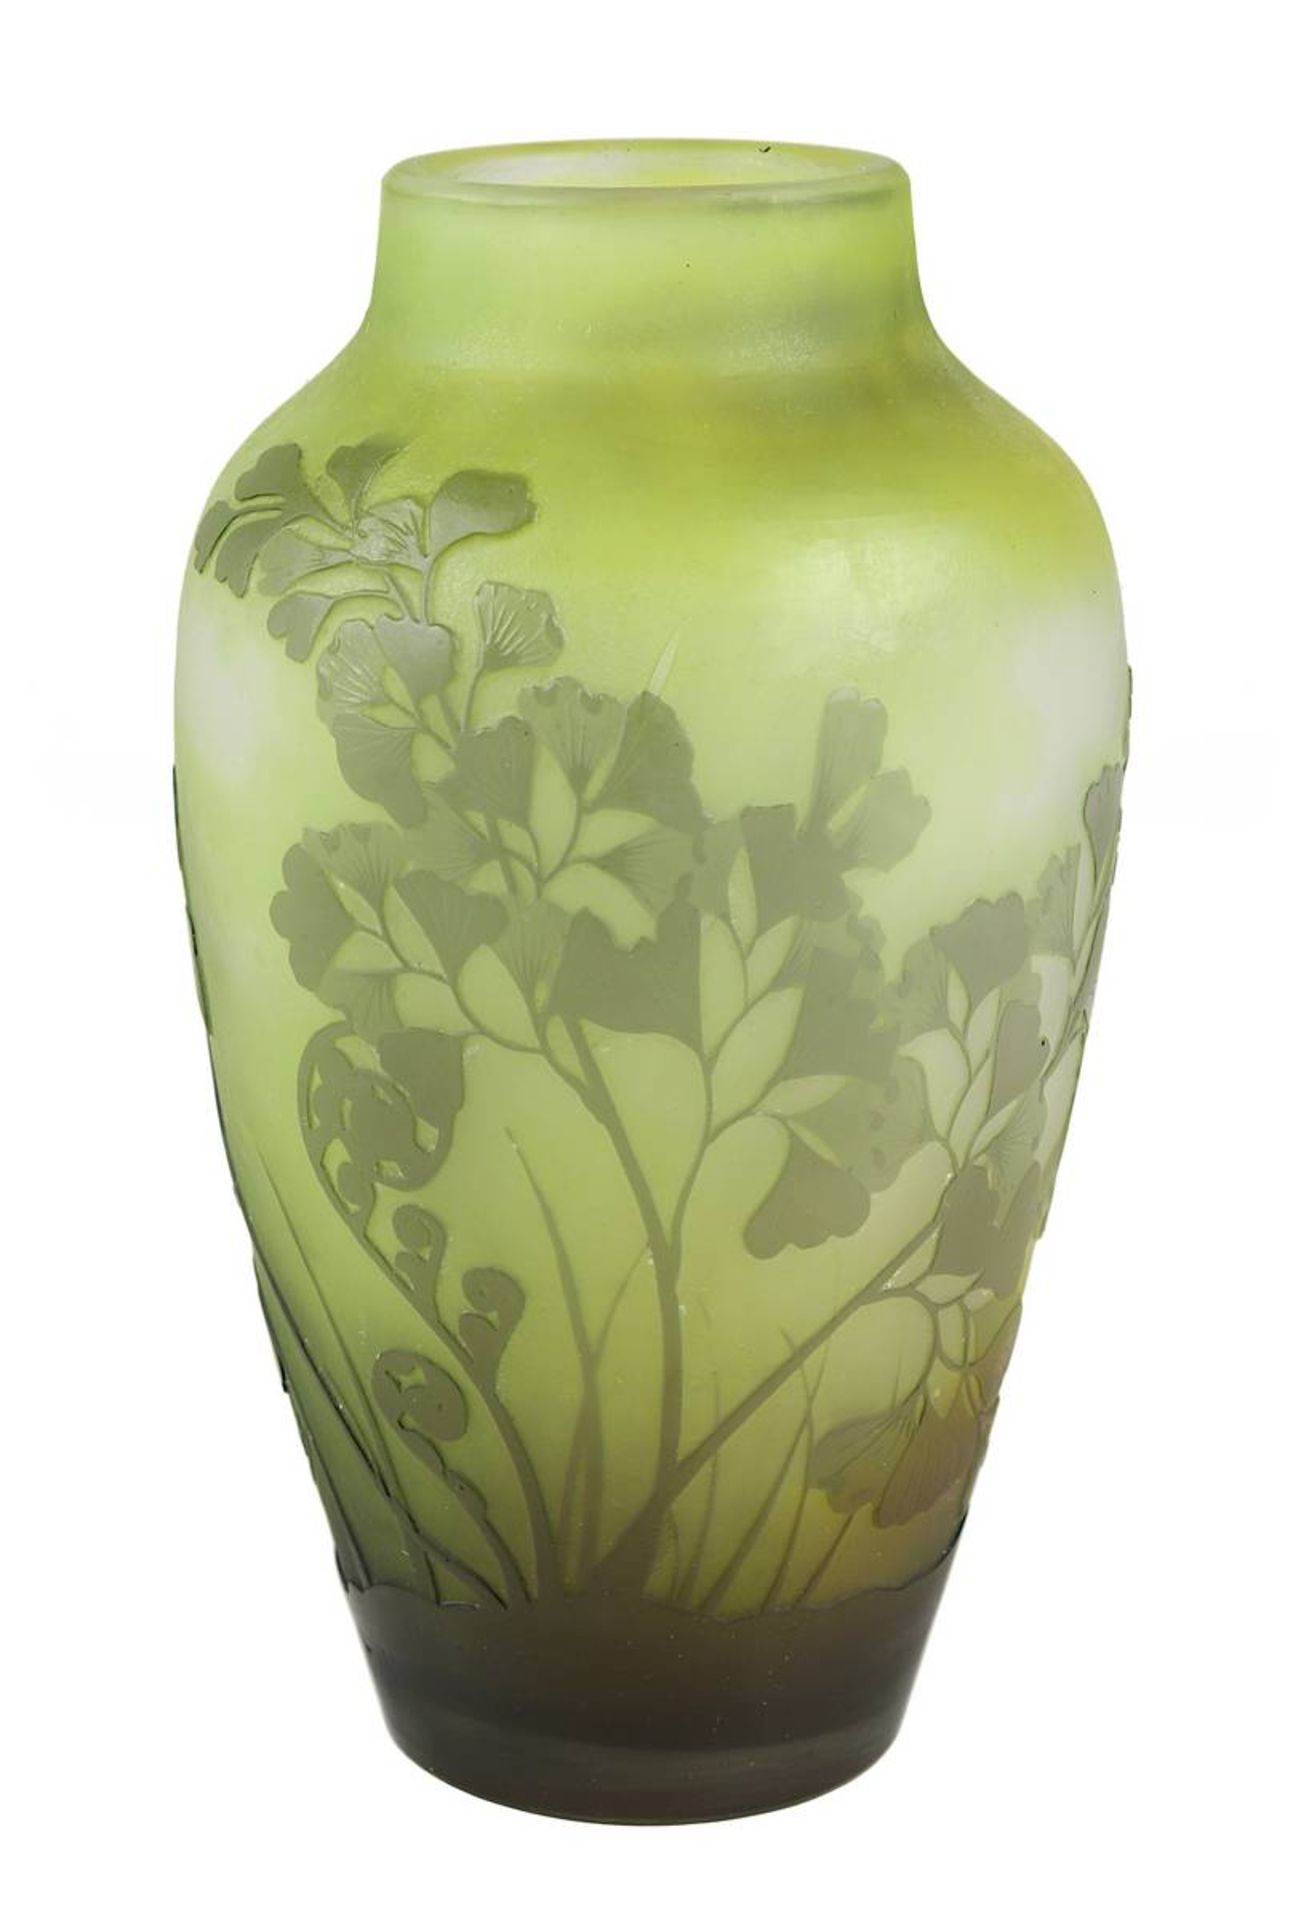 Gallé Jugendstil-Vase mit Farnmotiv, Nancy 1906-14, Klarglaskorpus innen mit grünbraunem